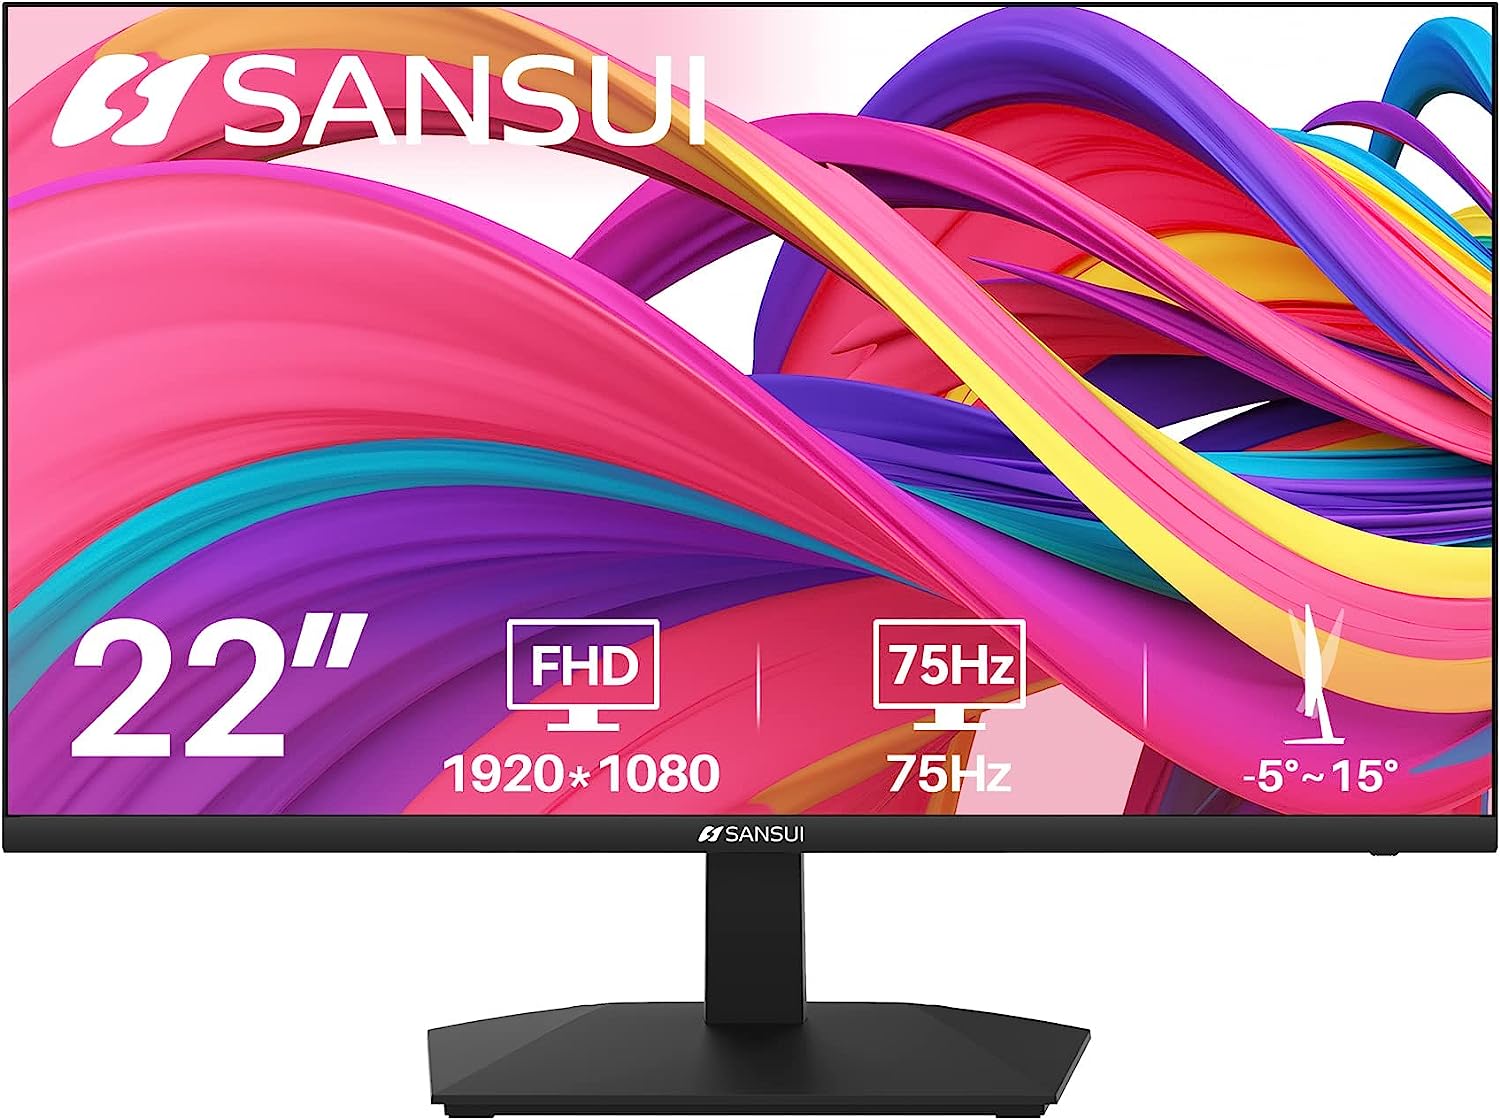 SANSUI Monitor 22 inch 1080p FHD 75Hz Computer Monitor [...]